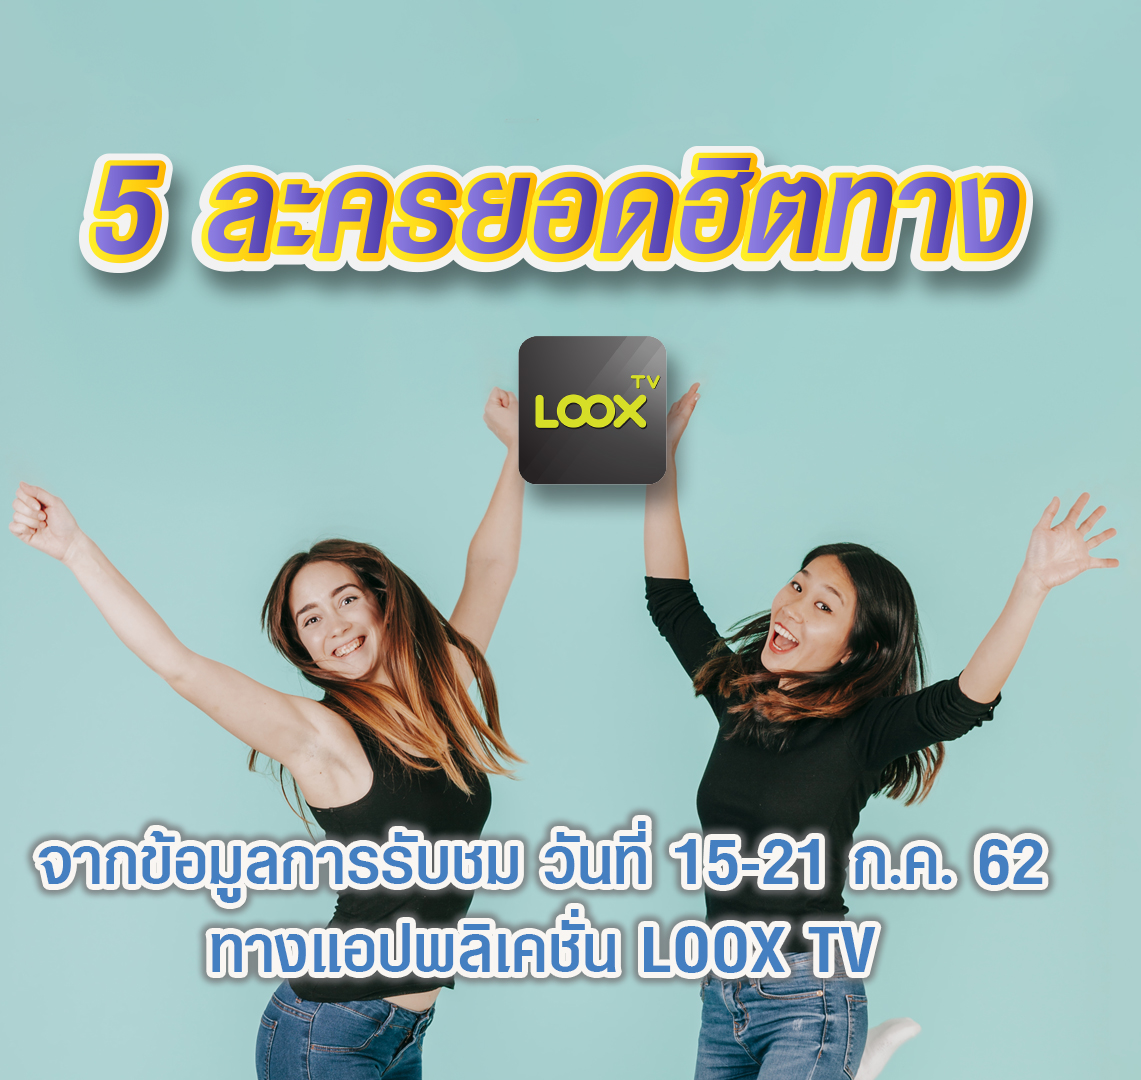 LOOX TV เรตติ้งละคร 15-21 ก.ค. 62